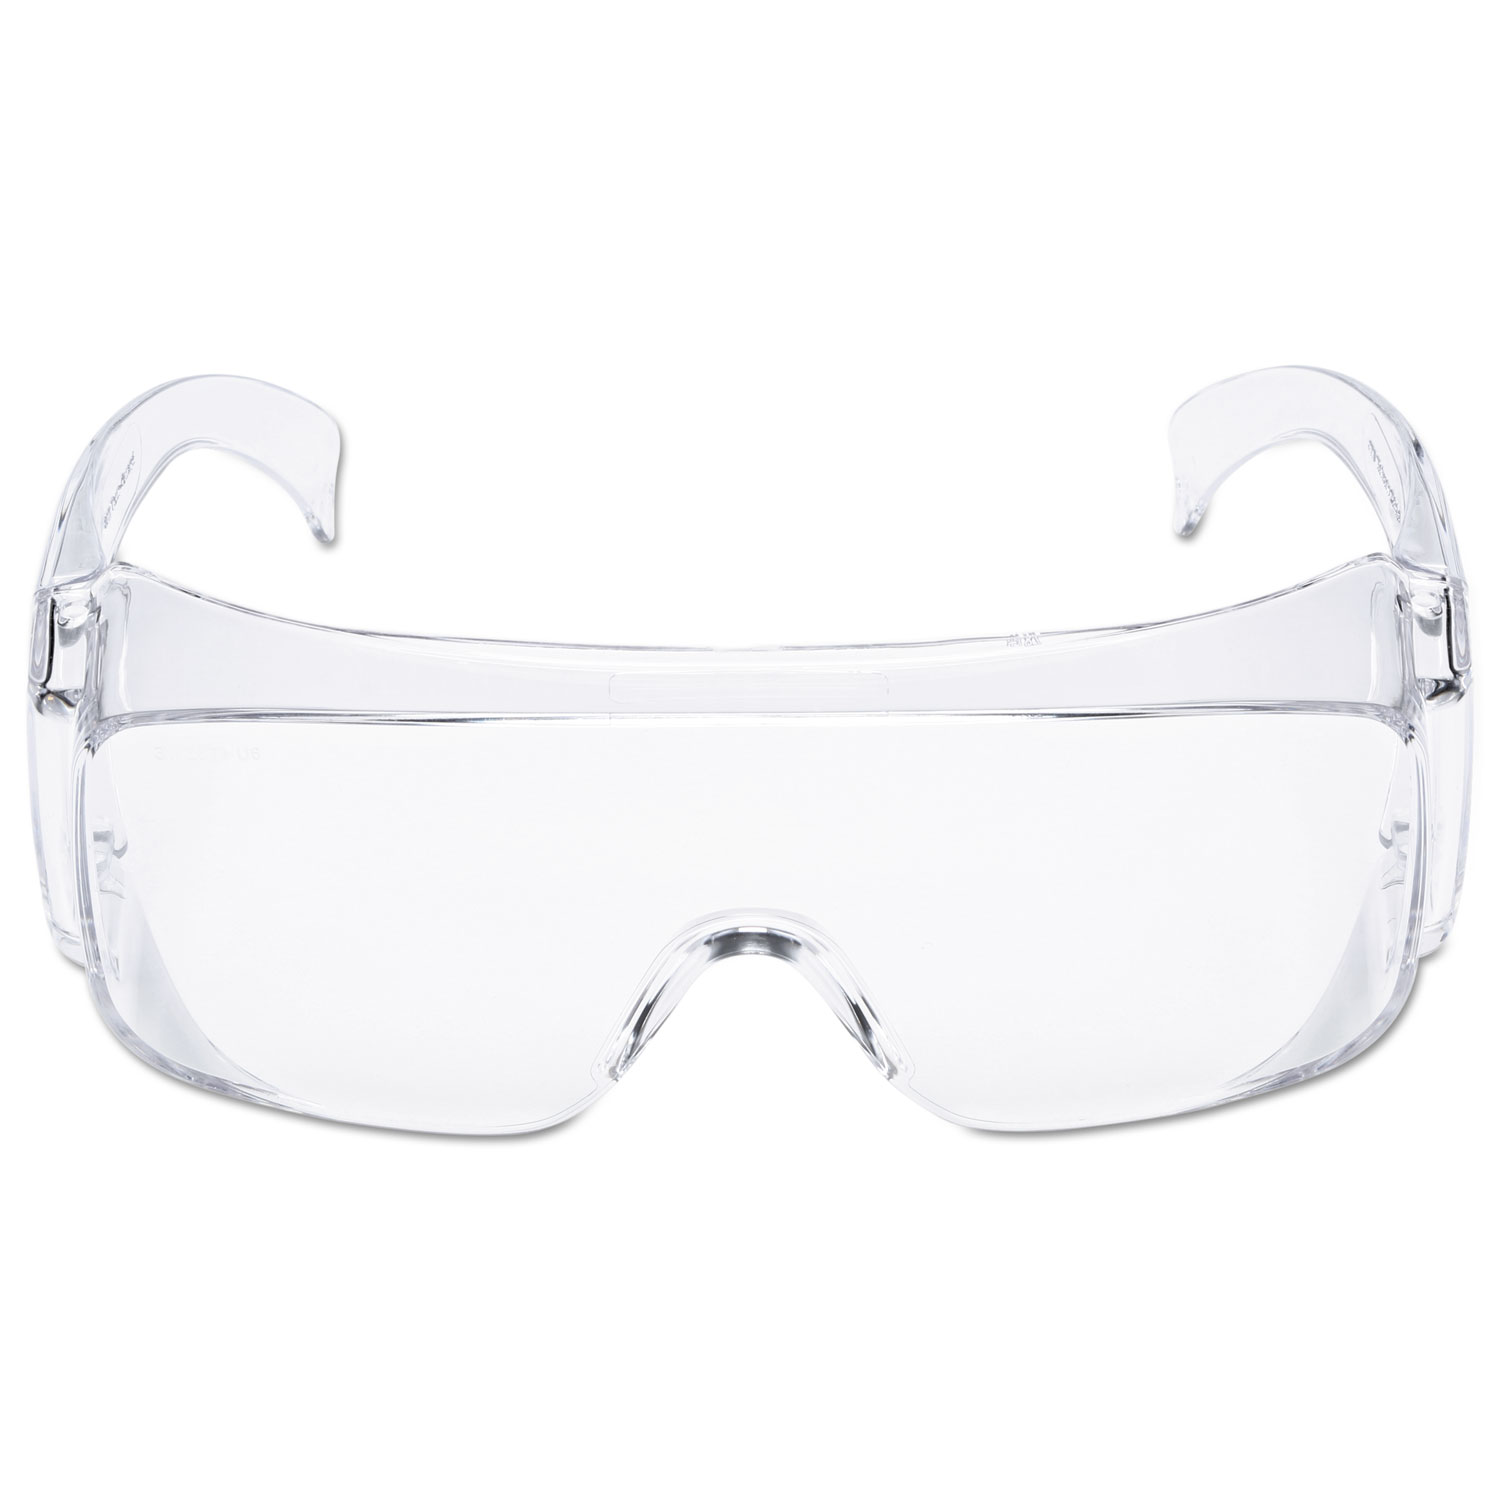 Tour-Guard V Protective Eyewear, Clear Polycarbonate Frame/Lens, 100/Carton